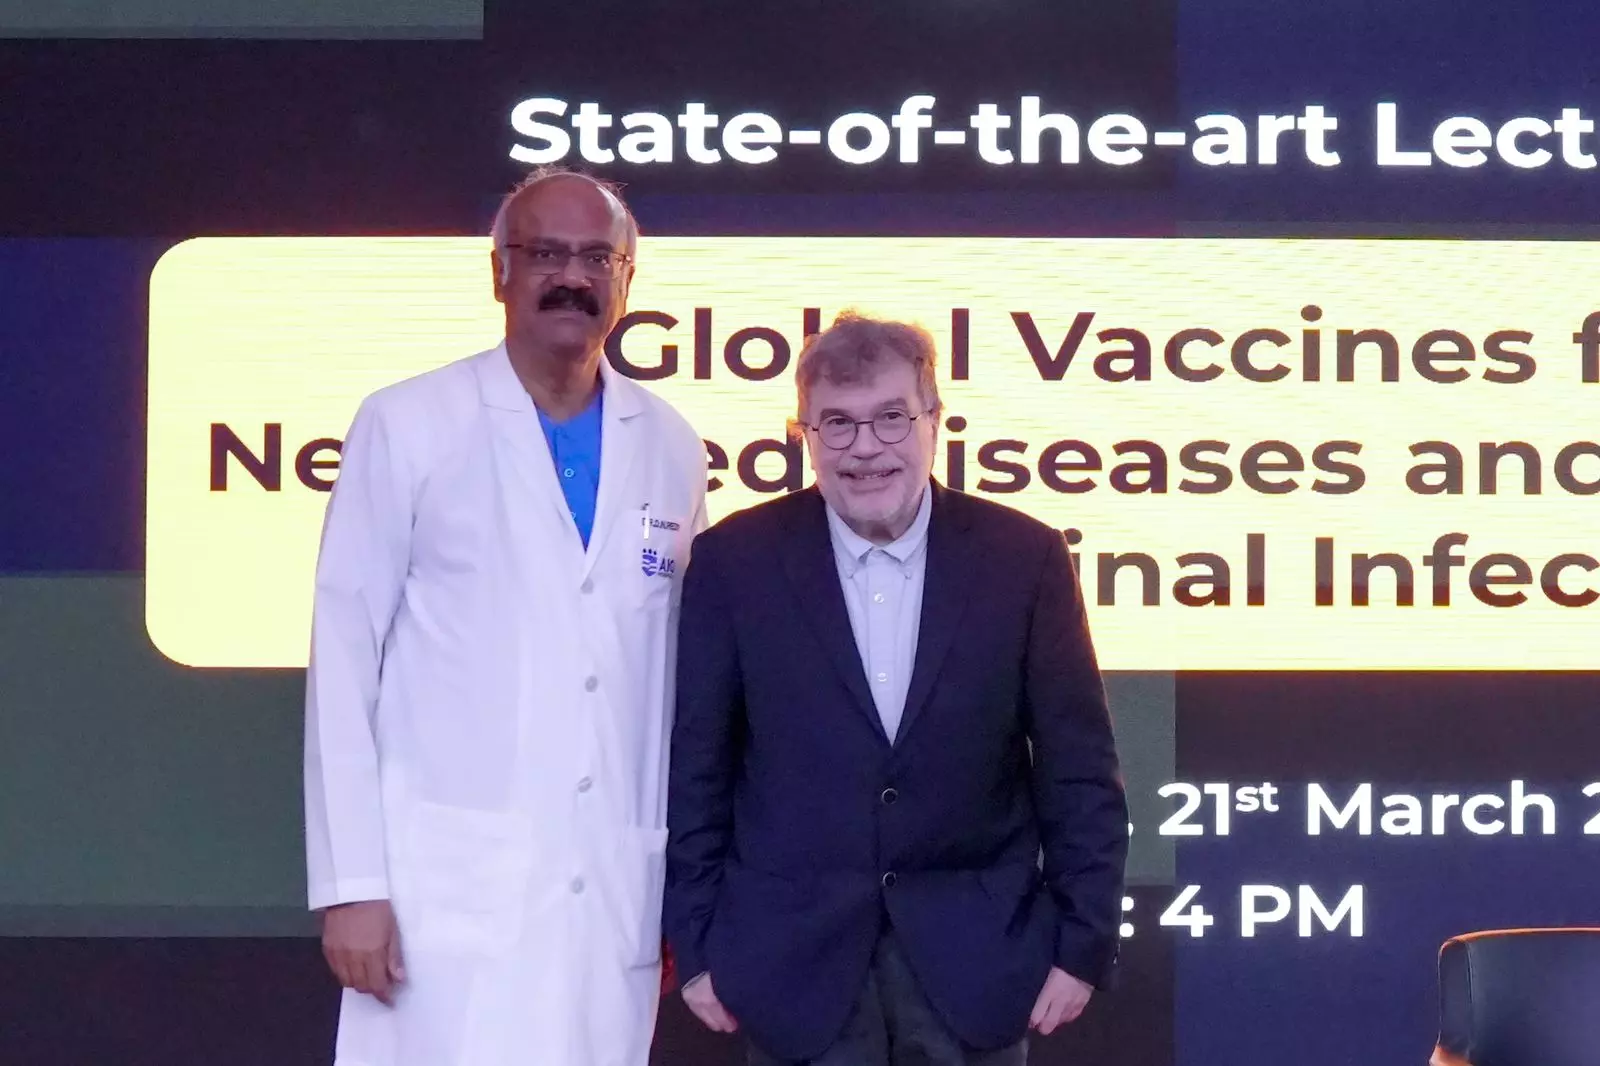 Professor Peter J Hotez Urges Urgent Action on Neglected Disease Vaccines